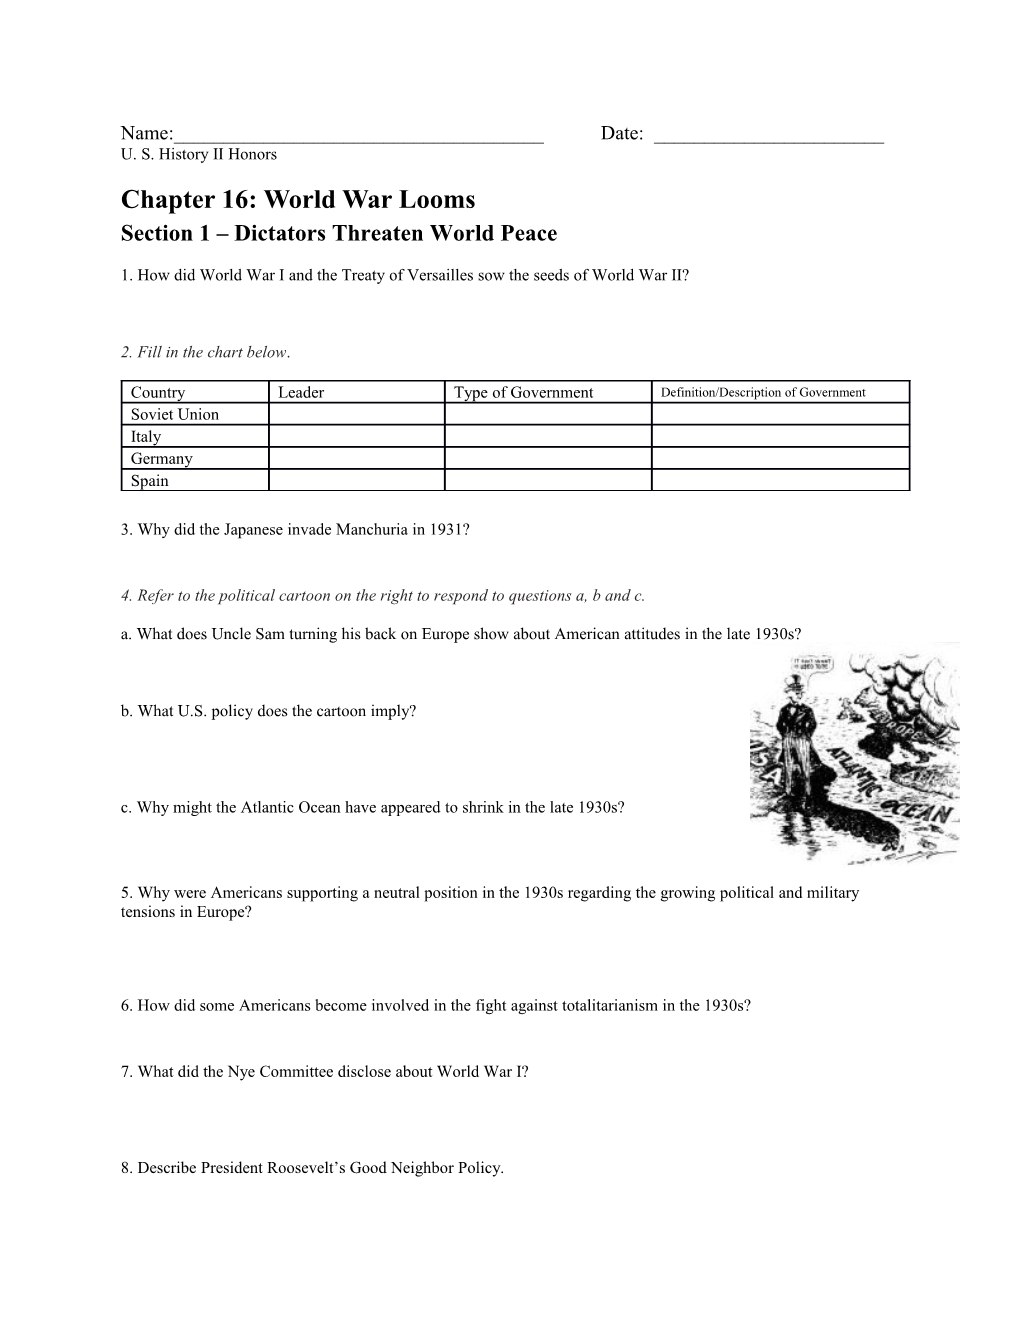 Chapter 16: World War Looms